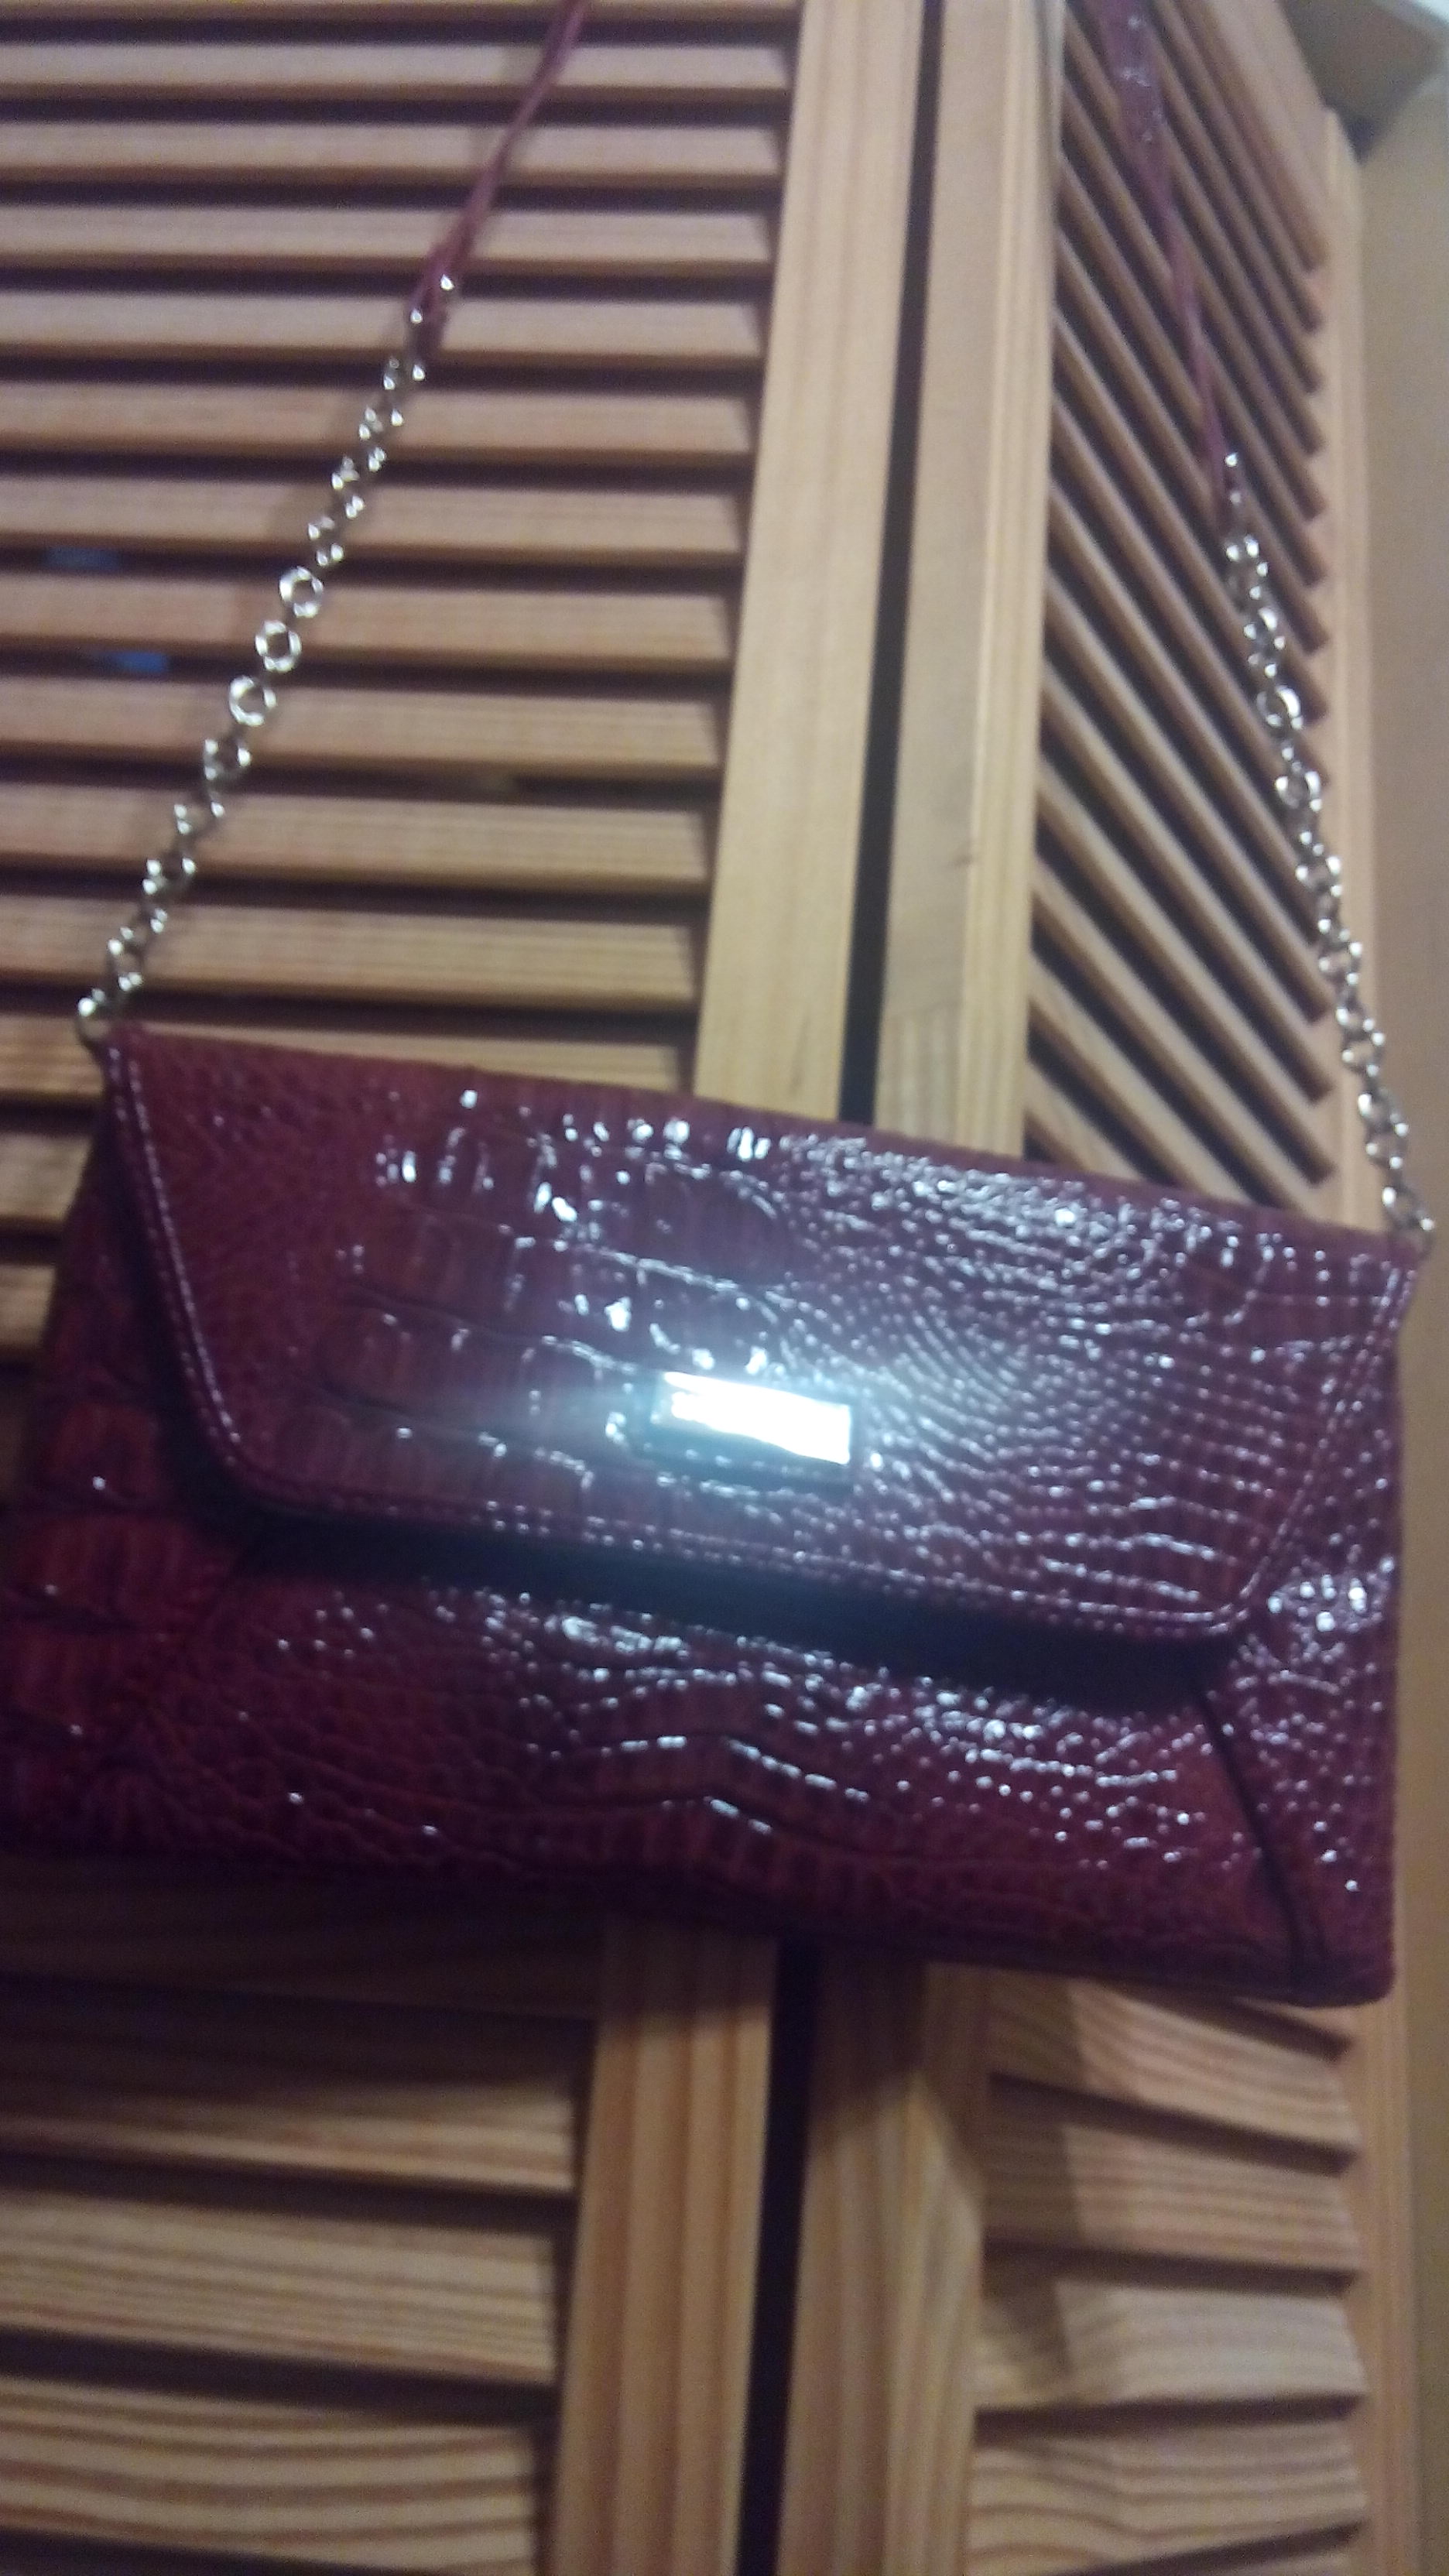 Burgundy Nine West purse